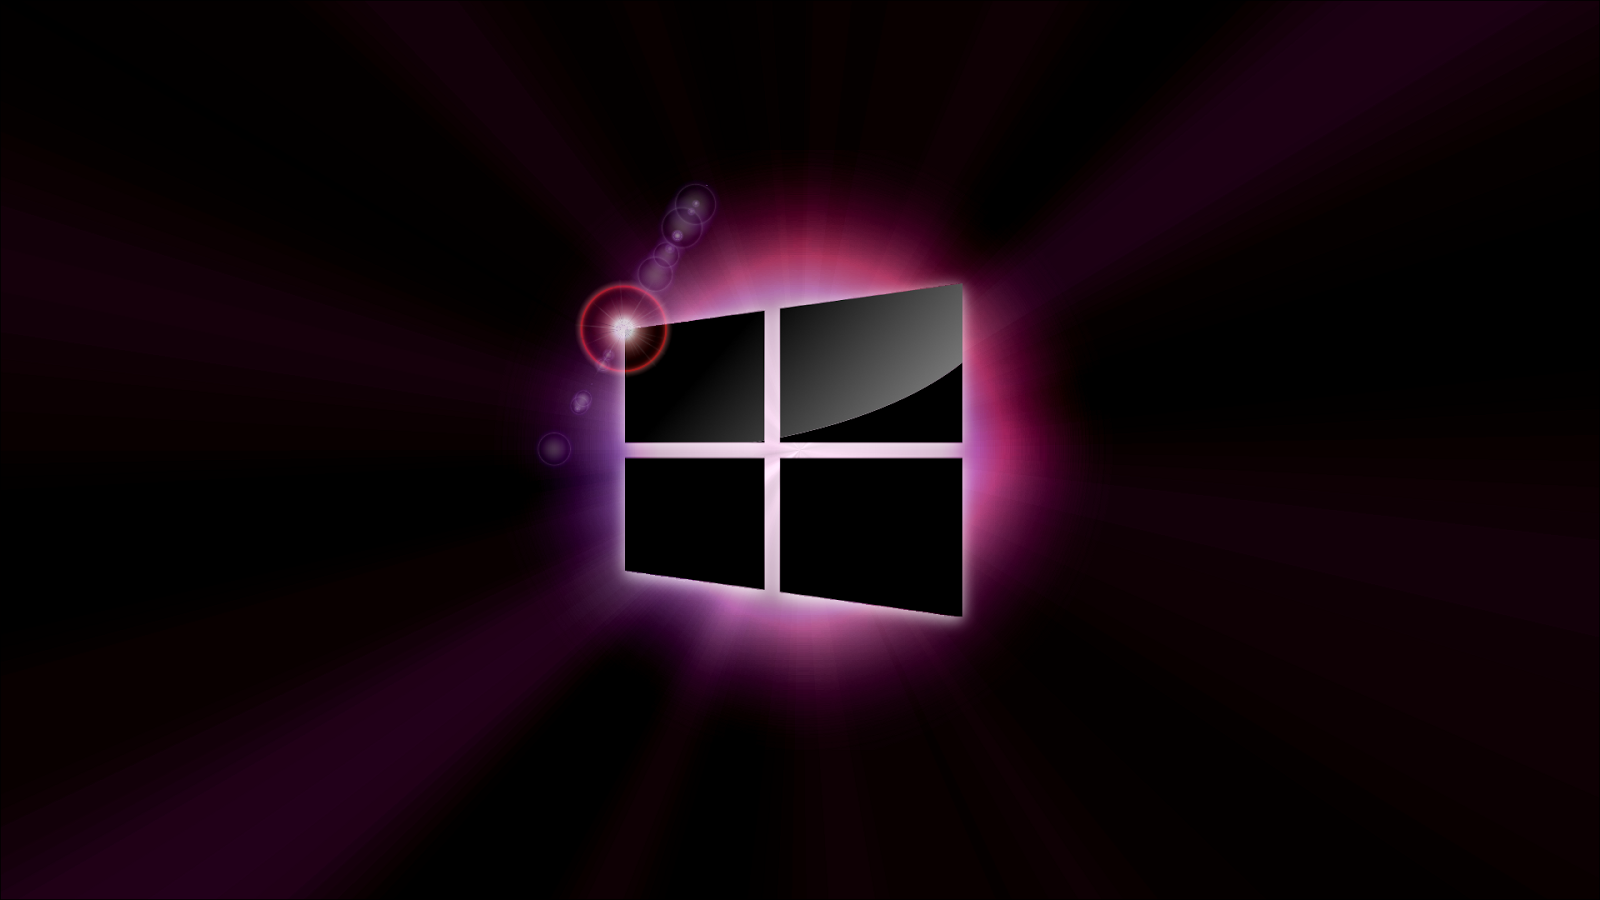 windows 8.1 wallpaper themes,purple,violet,light,magenta,graphic design